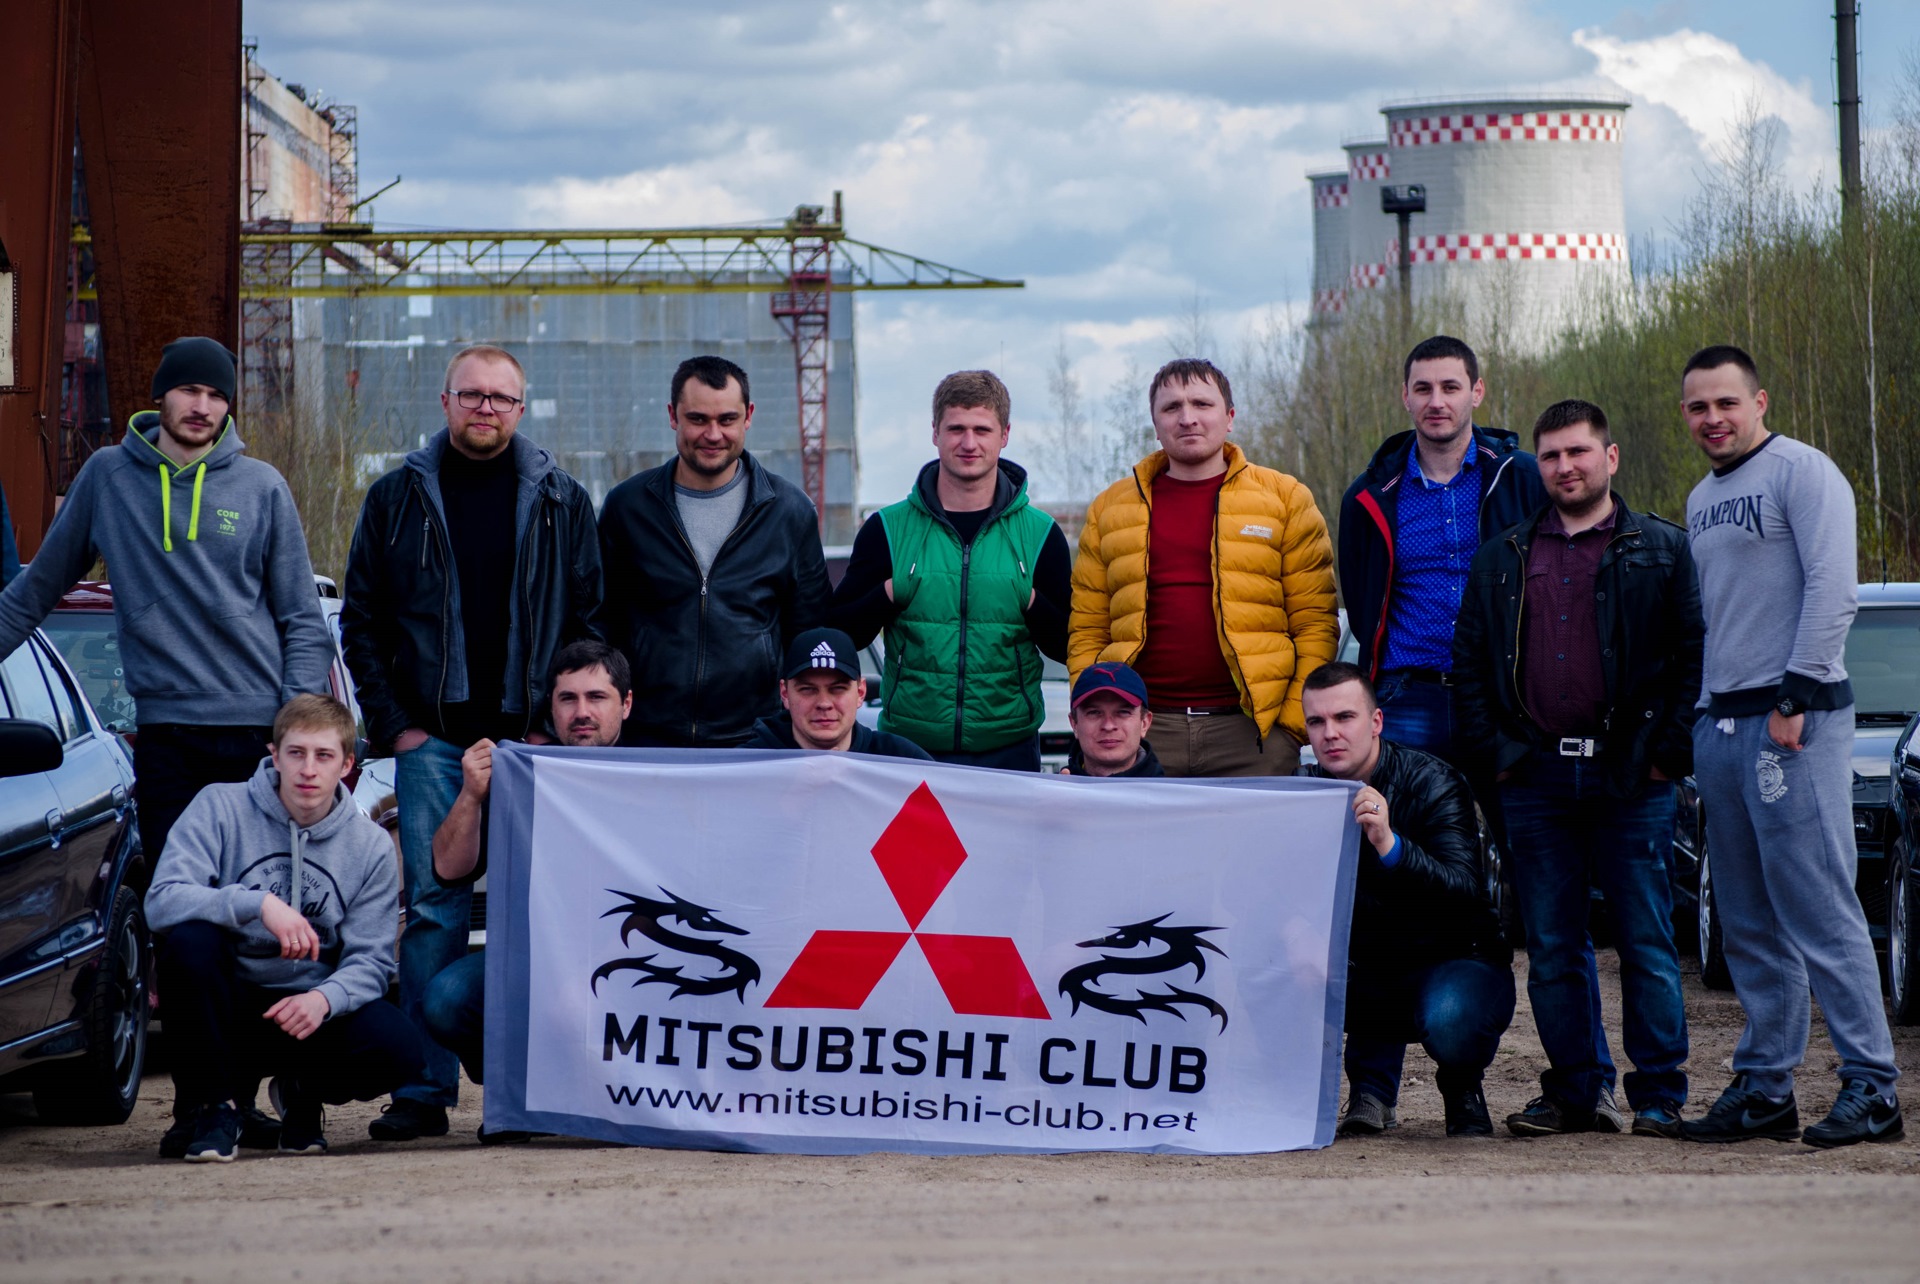 Mitsubishi club